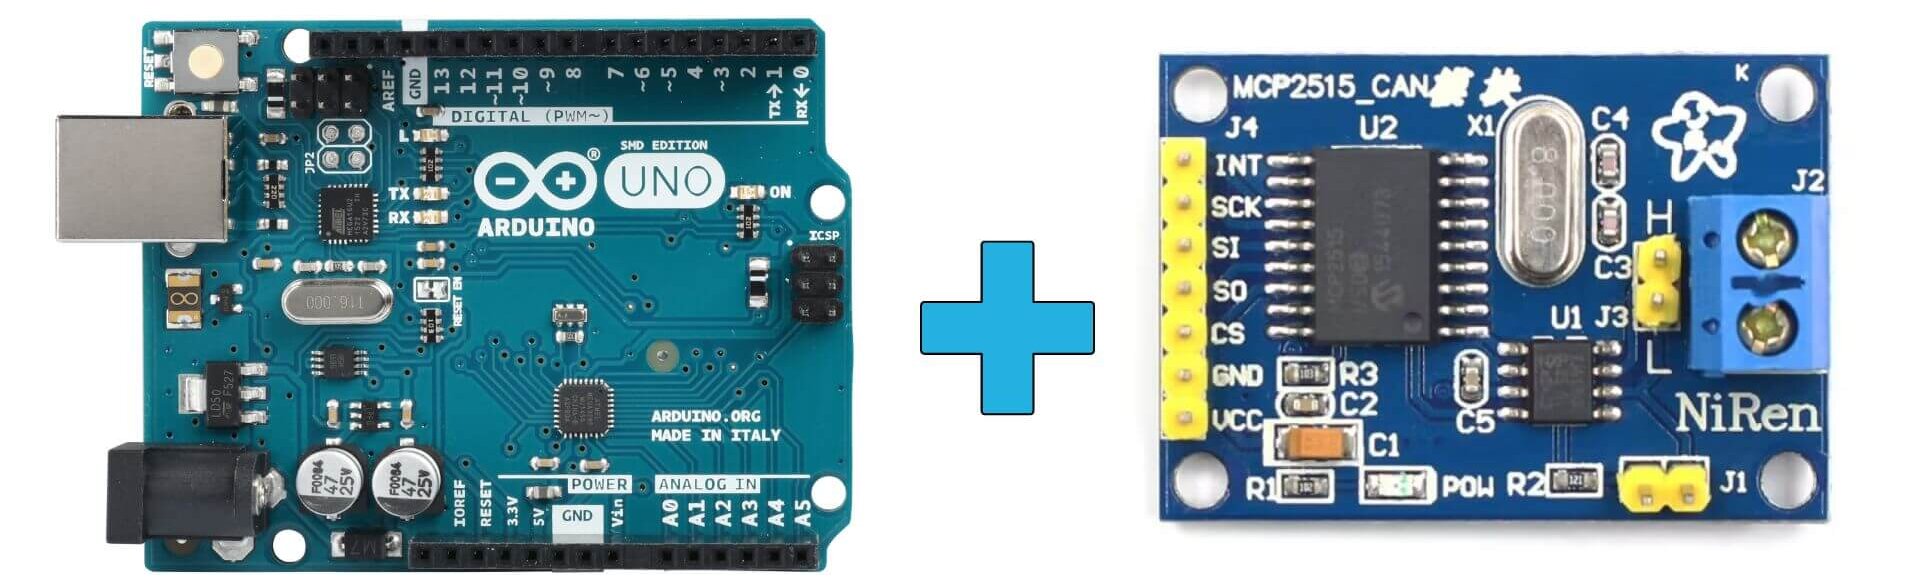 MCP2515 Module work with Arduino